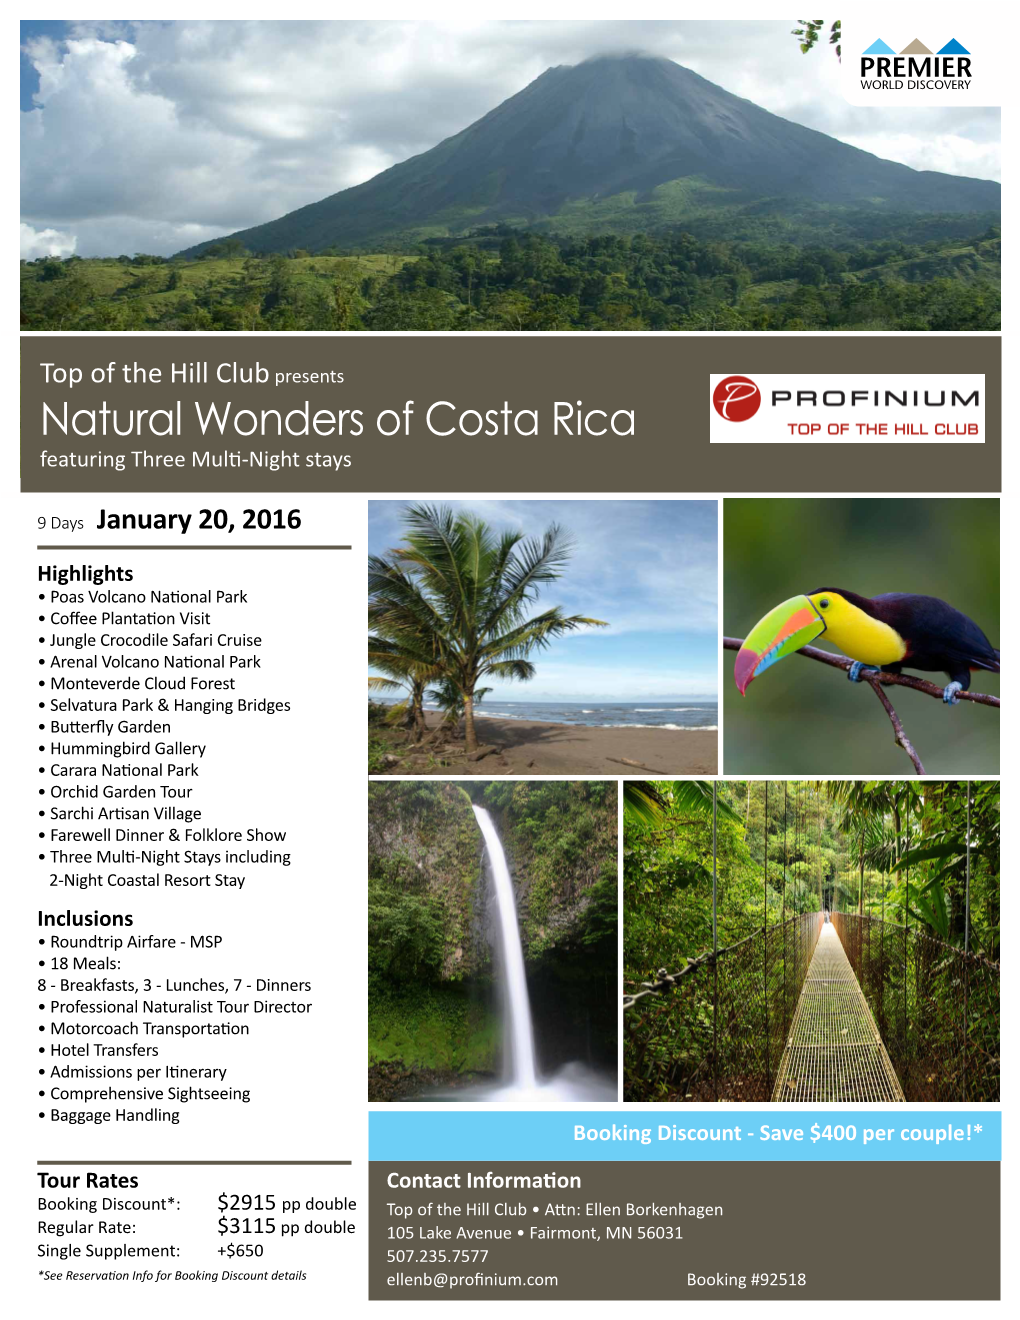 Natural Wonders of Costa Rica Featuring Three Multi-Night Stays